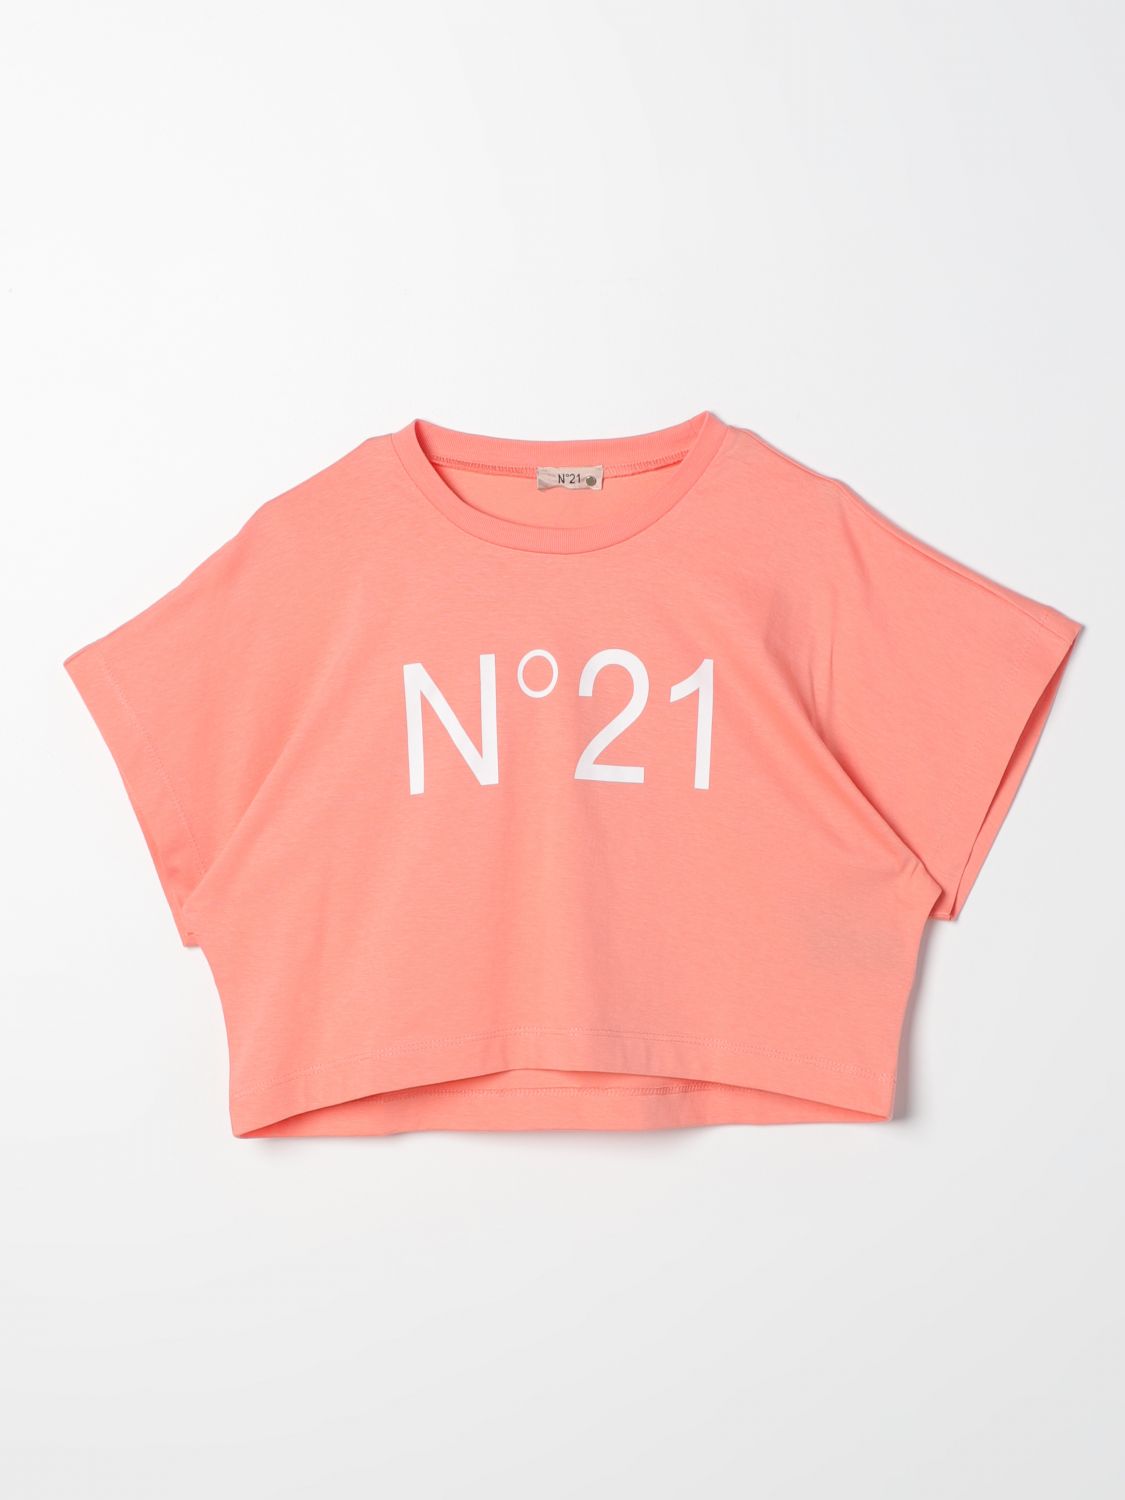 Shop N°21 T-shirt N° 21 Kids Color Blush Pink